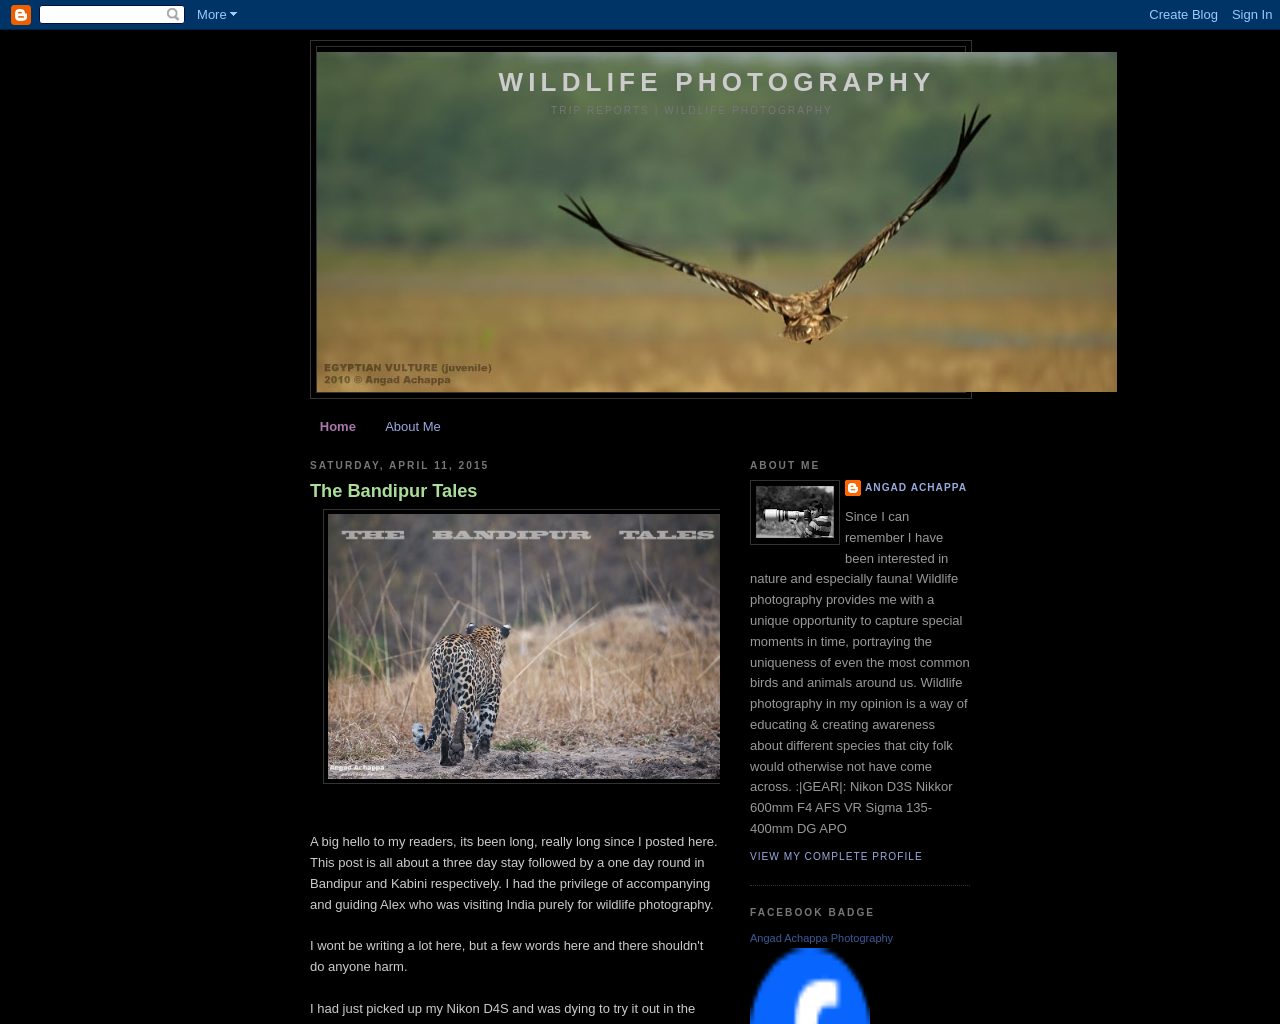 Indian Wildlife Photography